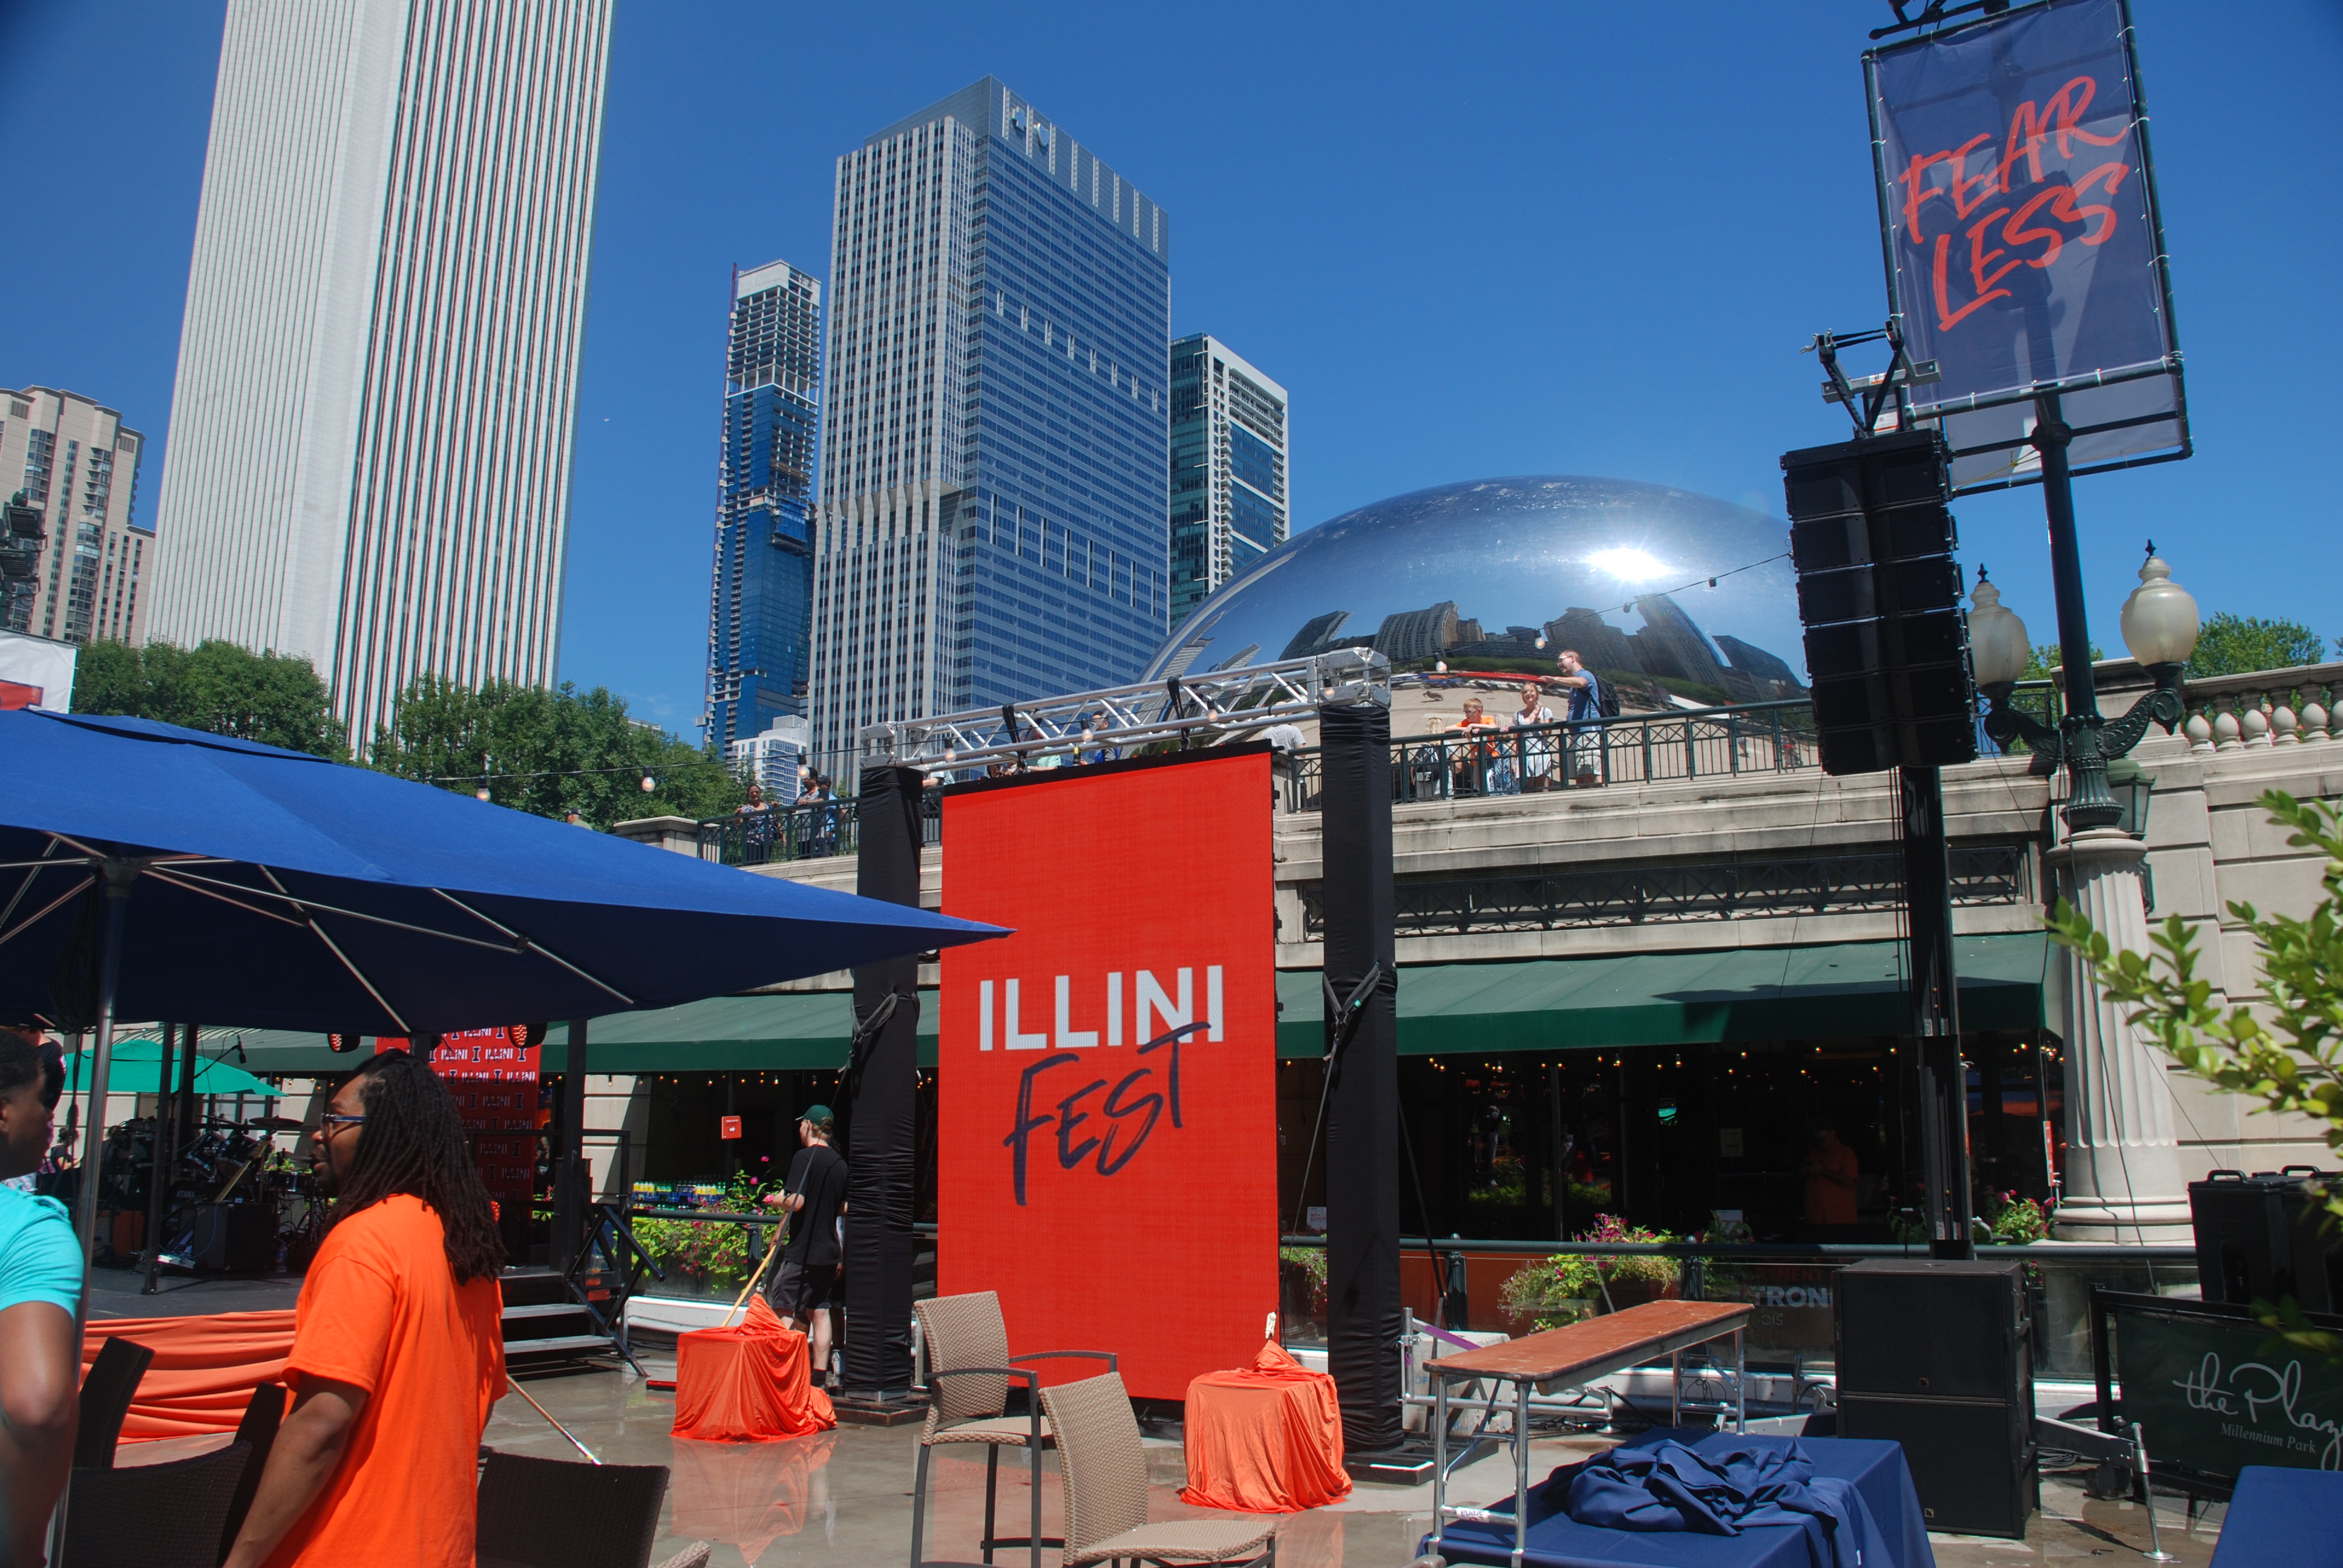 Illini Fest signage with Chicago skyscraper background